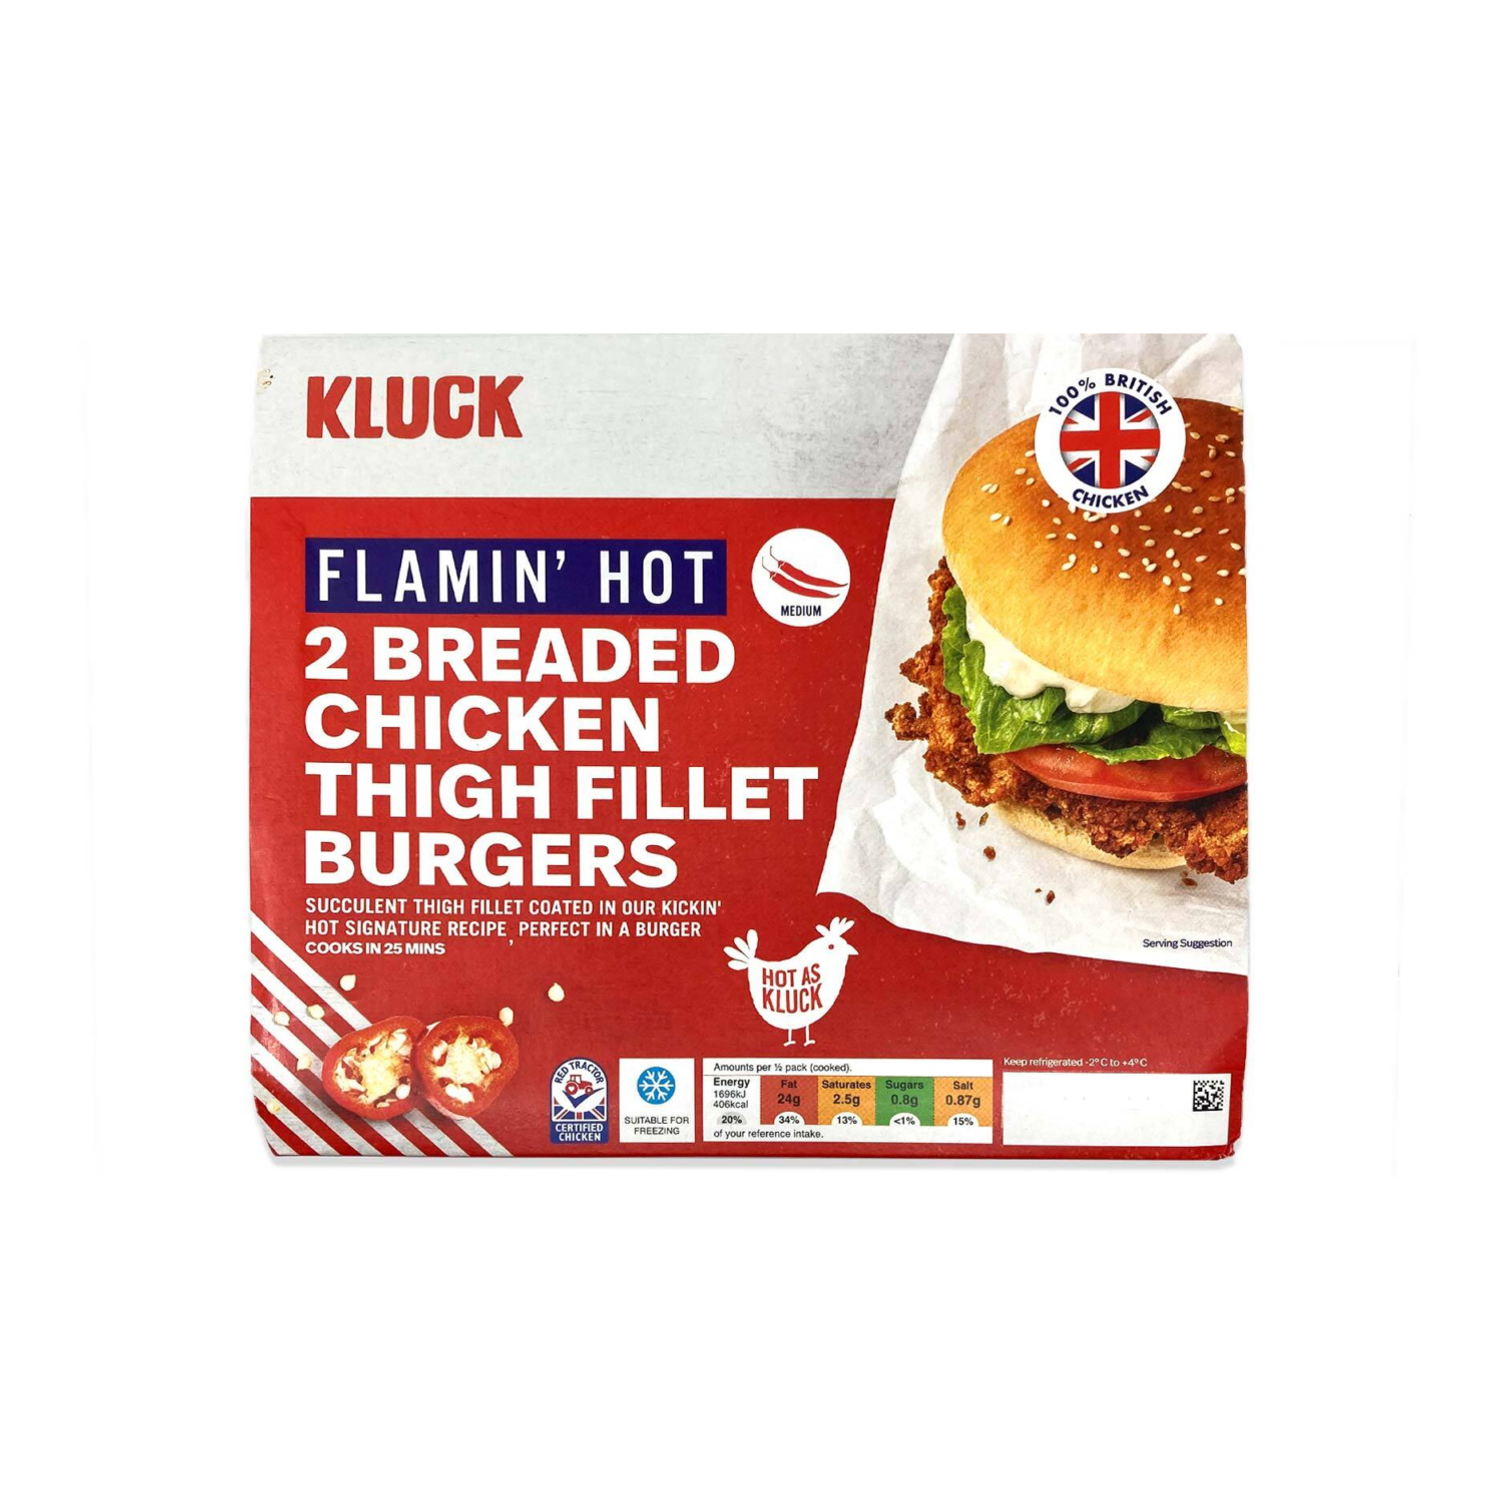 Huisdieren moe Afstoting Br: Kluck 2 Flamin' Hot Breaded Chicken Thigh Fillet Burgers 315g | ALDI